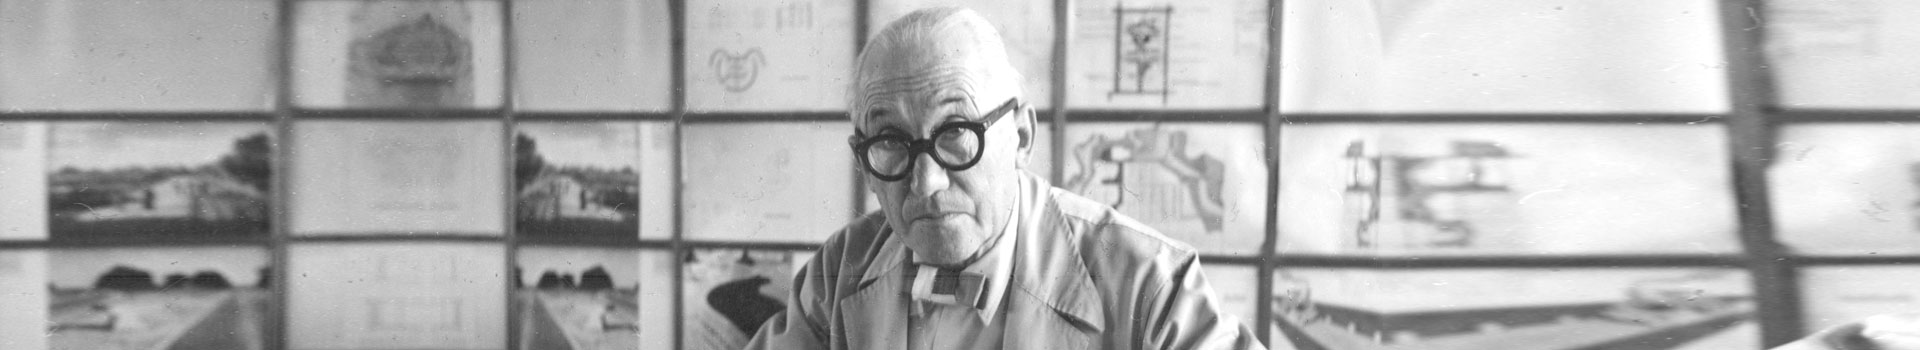 Le Corbusier ©FLC/ADAGP